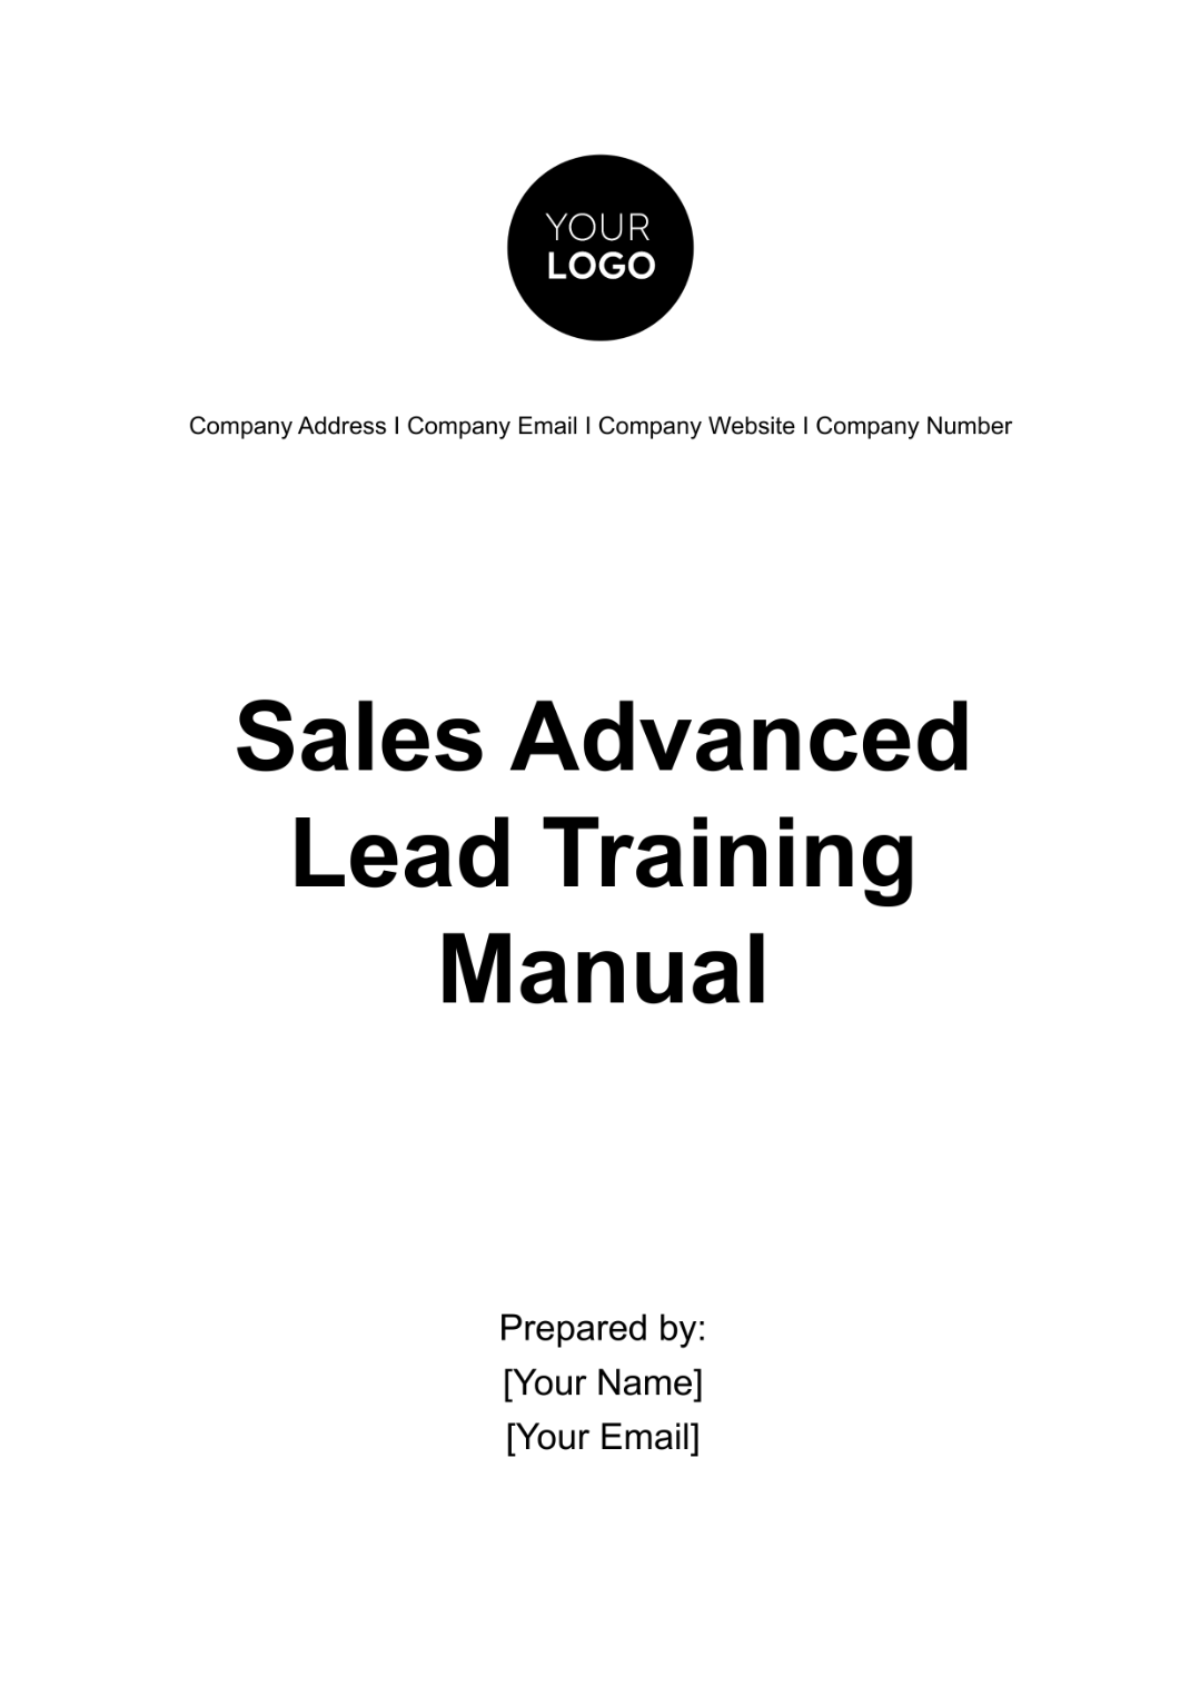 Free Sales Advanced Lead Training Manual Template